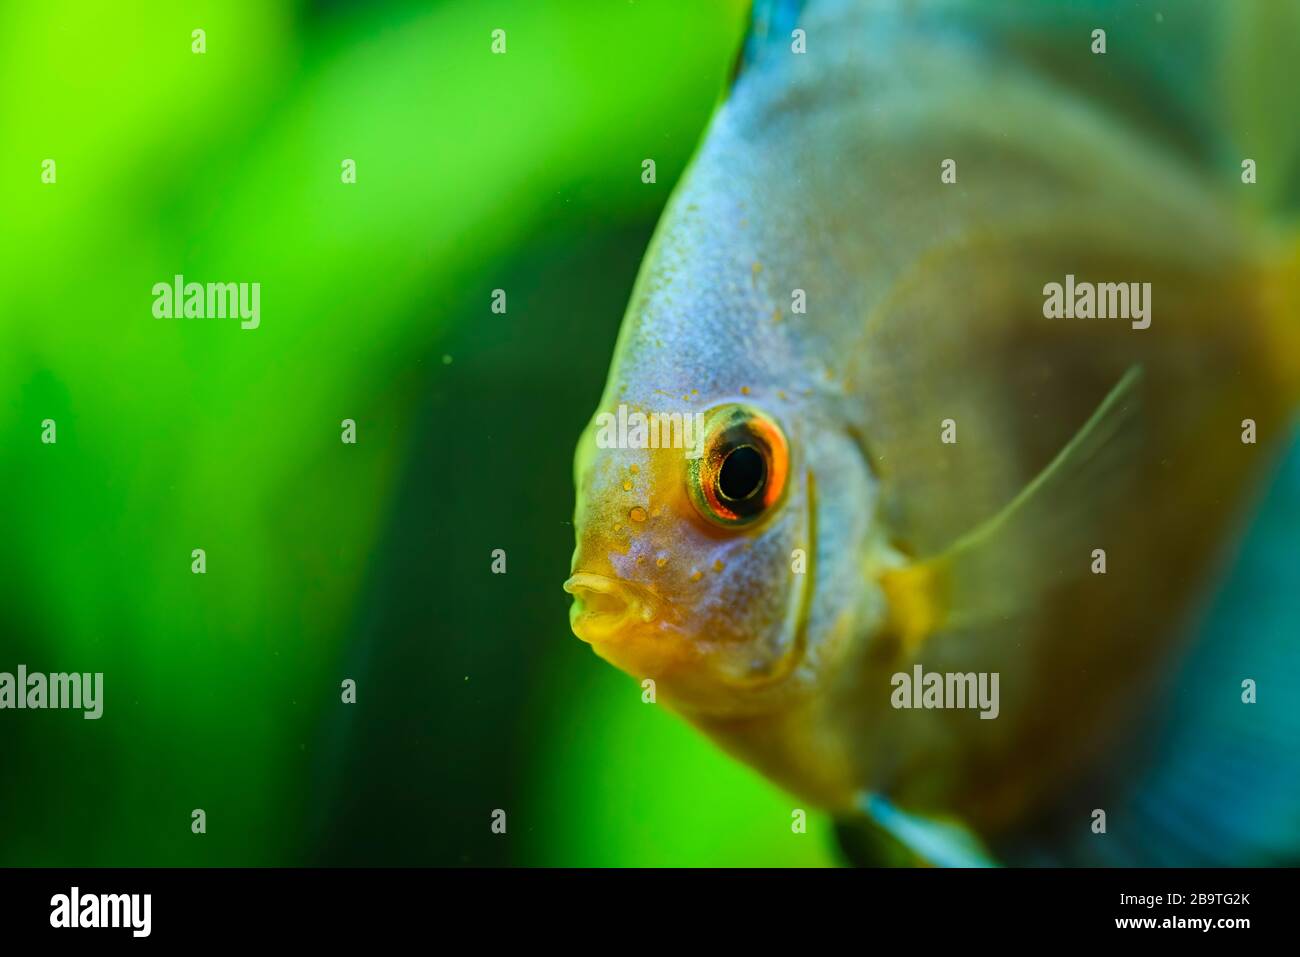 Portrait of a blue tropical Symphysodon discus fish in a fishtank. Stock Photo